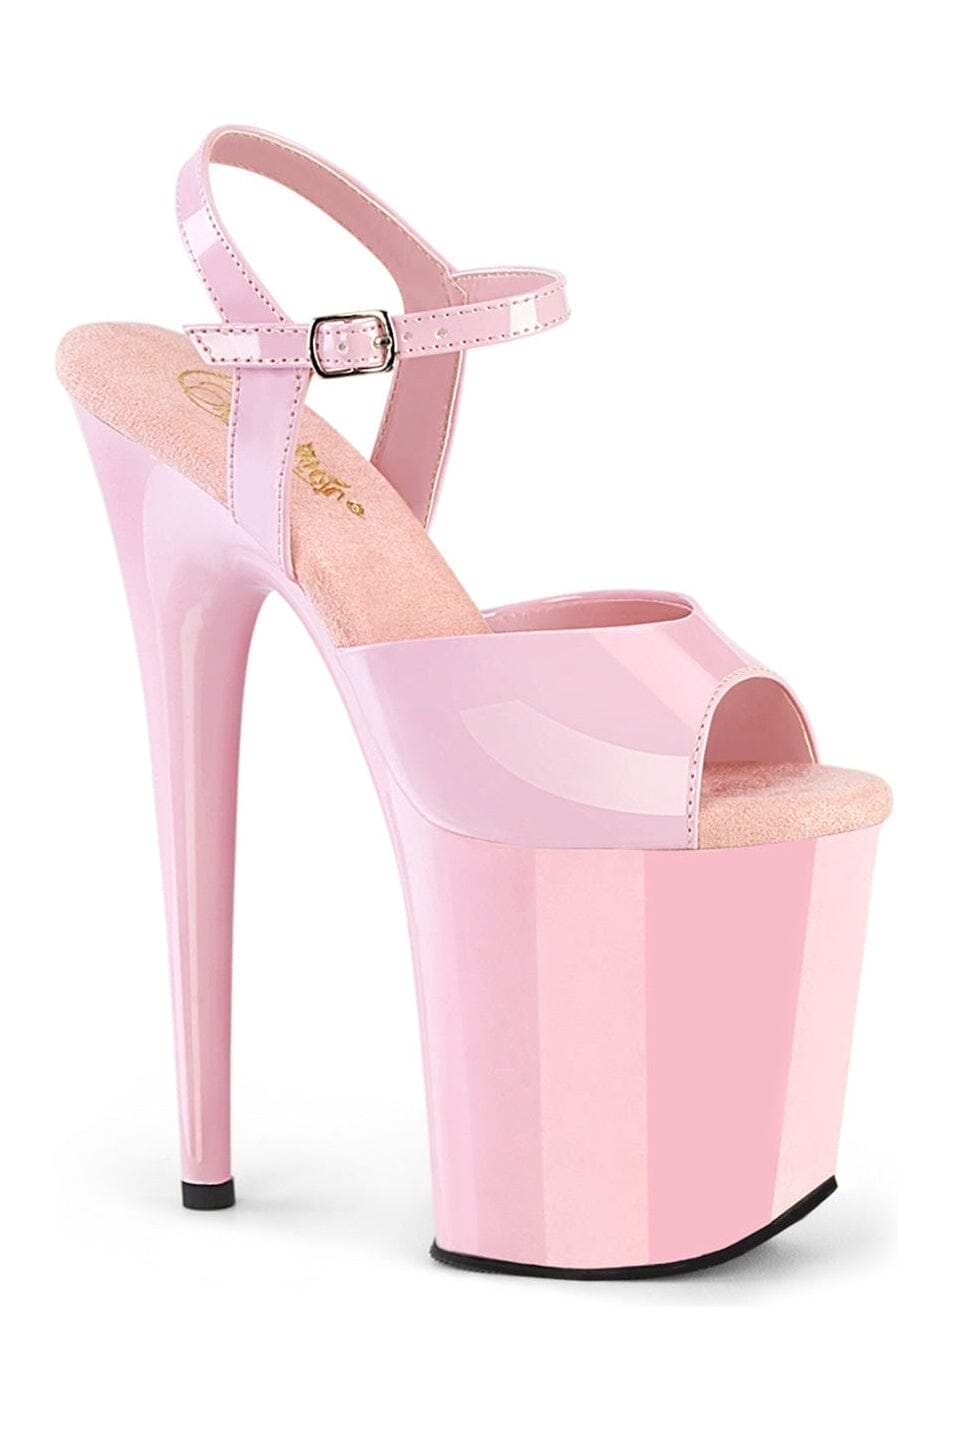 FLAMINGO-809 Pink Patent Sandal-Sandals-Pleaser-Pink-10-Patent-SEXYSHOES.COM